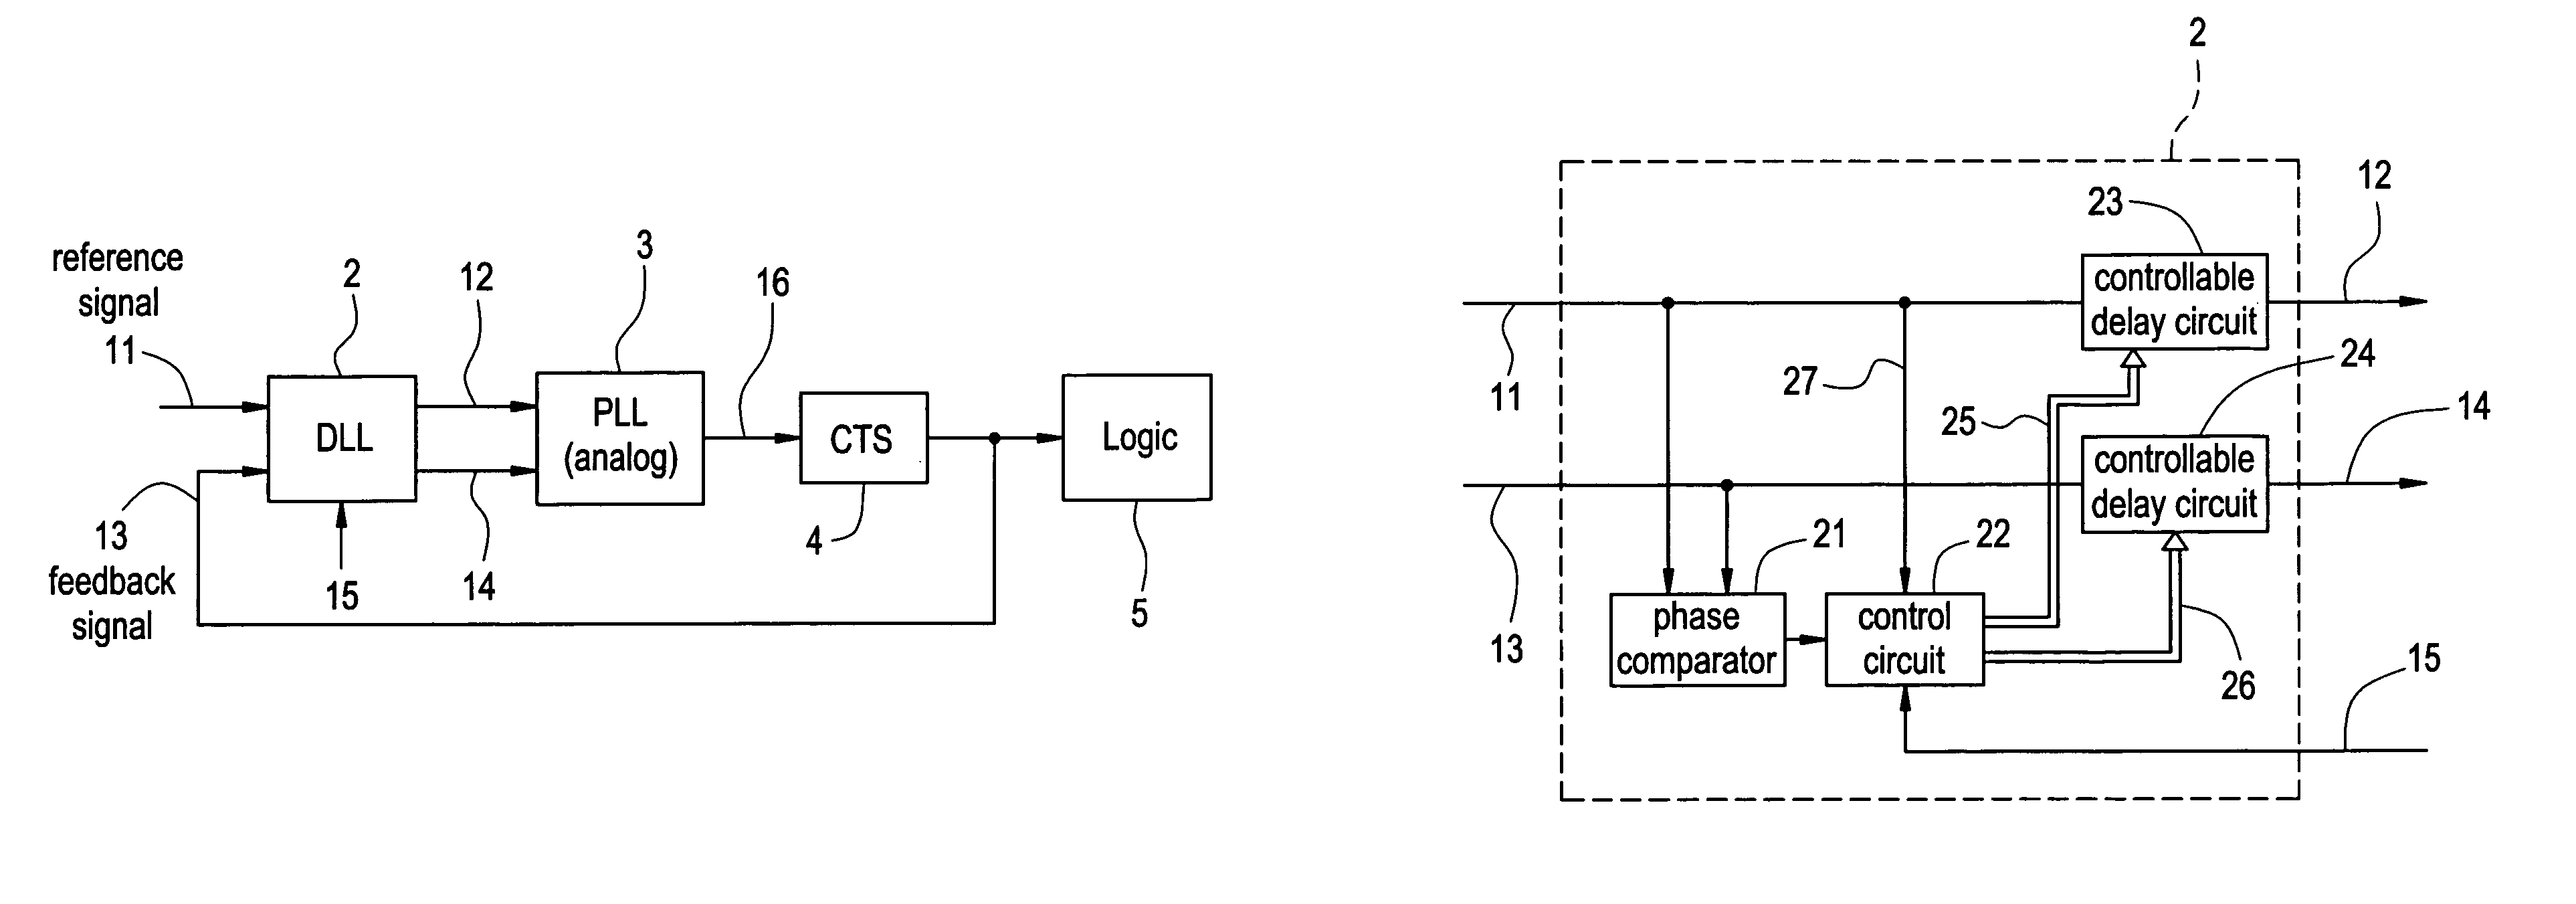 Phase-locked loop circuit reducing steady state phase error